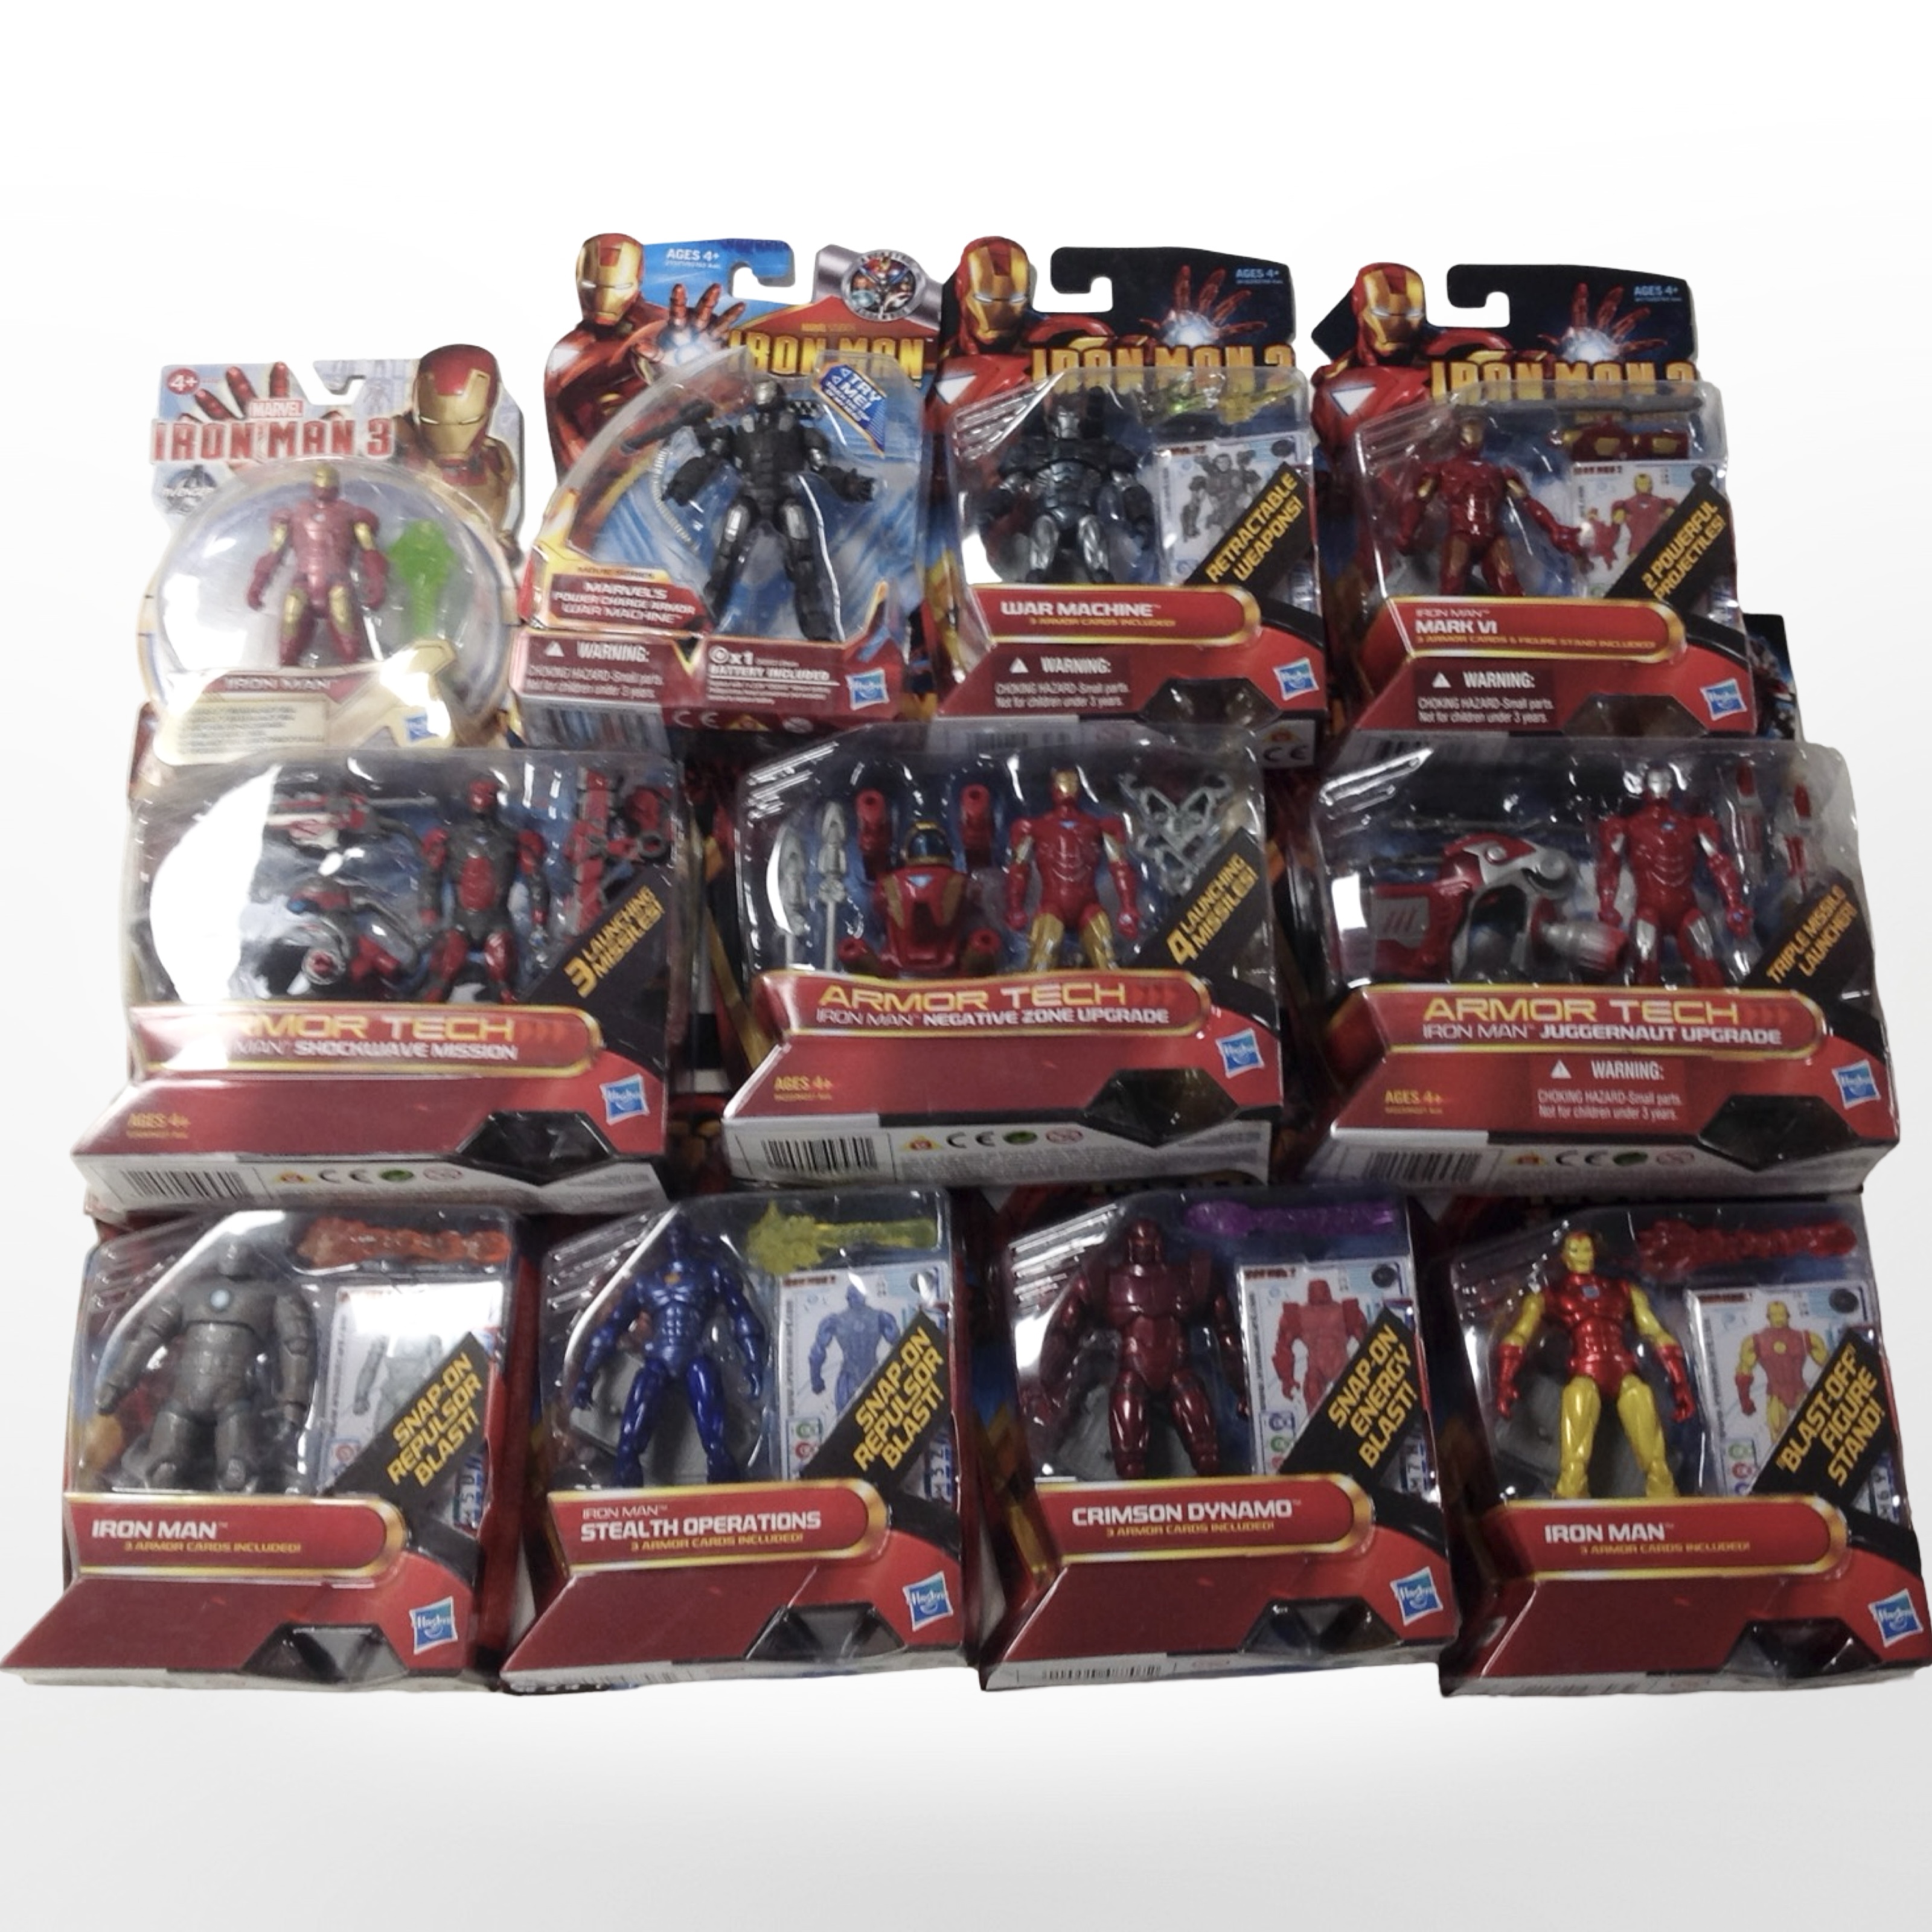 11 Hasbro Iron Man 2 and Iron Man 3 figurines, boxed.